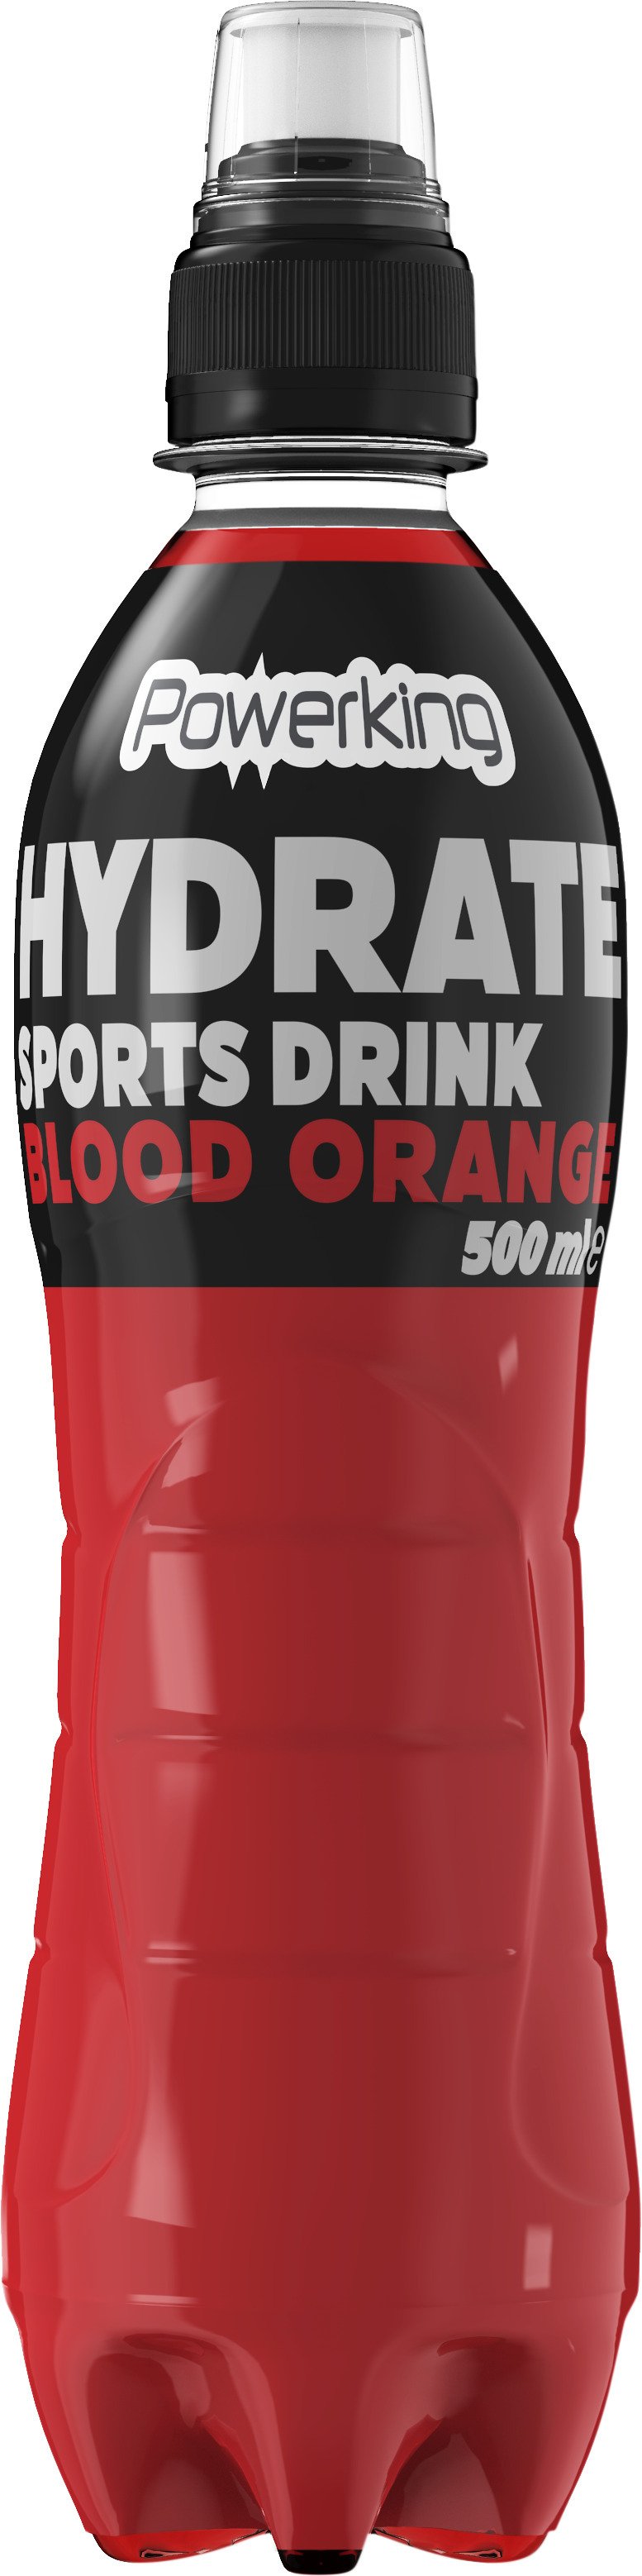 Powerking Sportdryck Blood Orange 500 ml